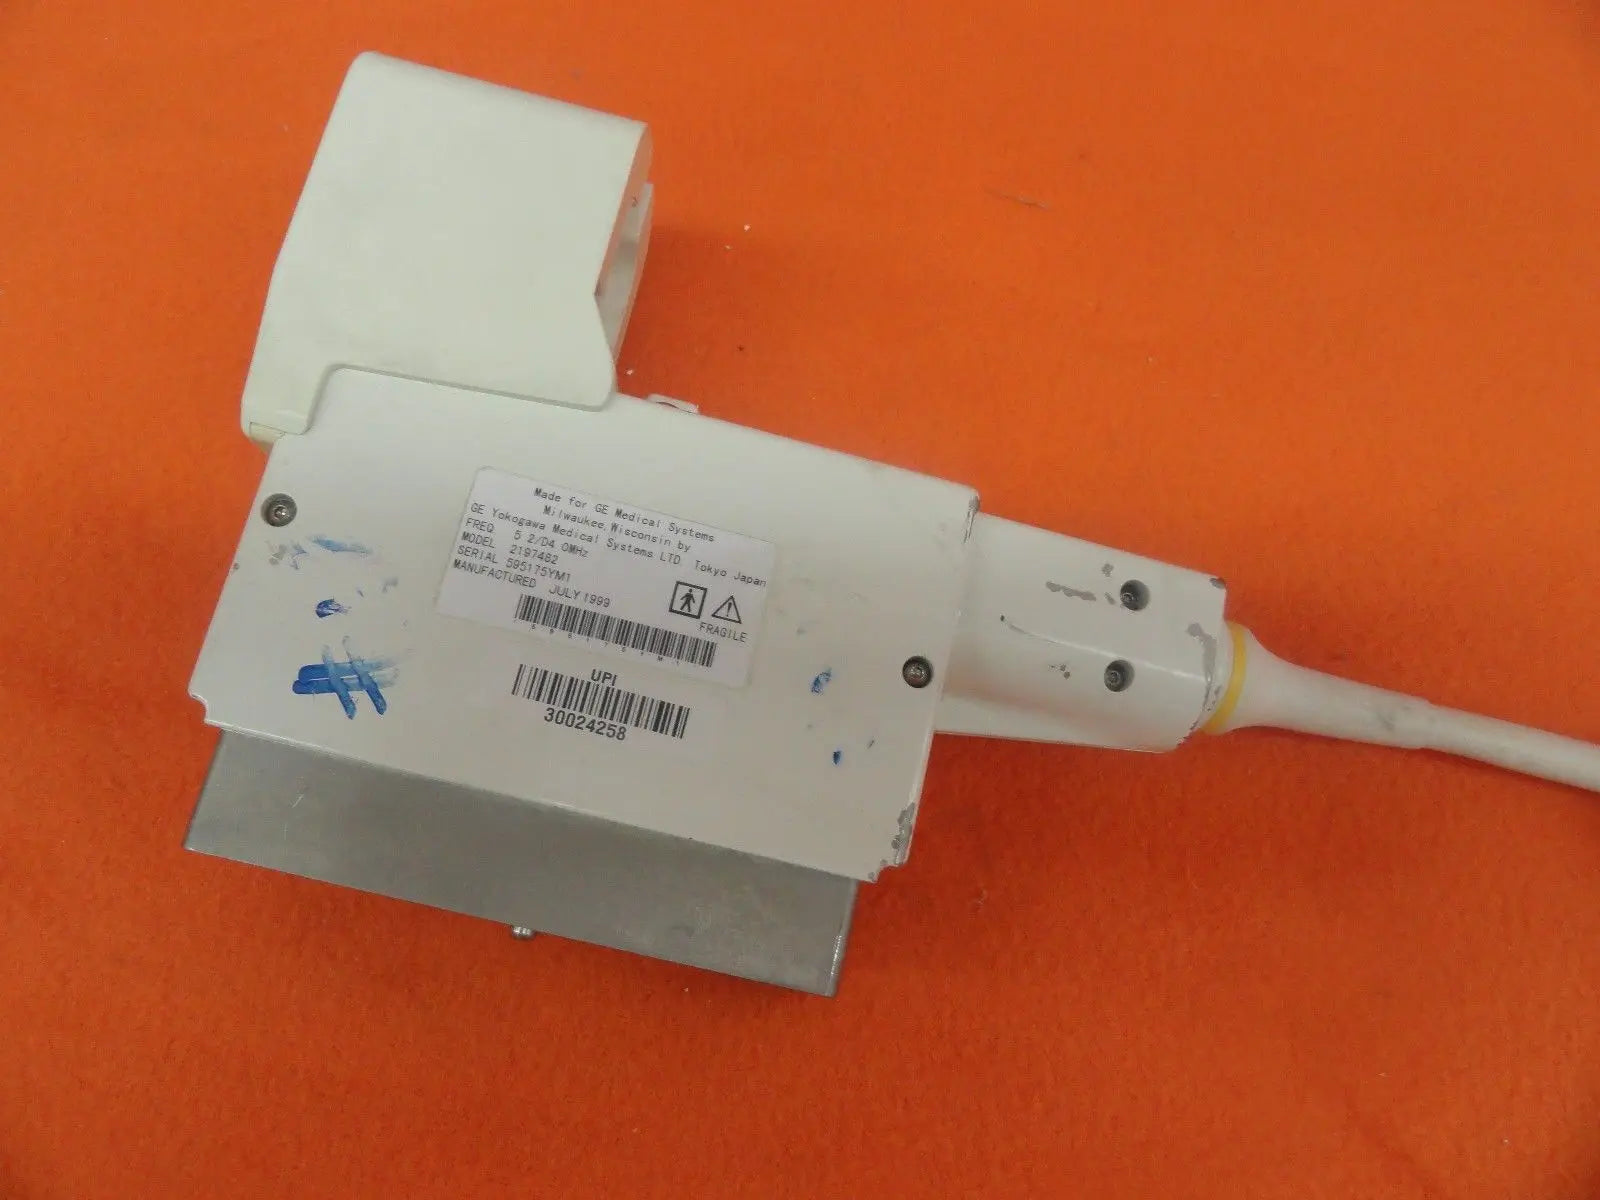 GE 546L P/N 2197482 Linear Array Ultrasound Probe for GE L400/L500/L700 (5516 )